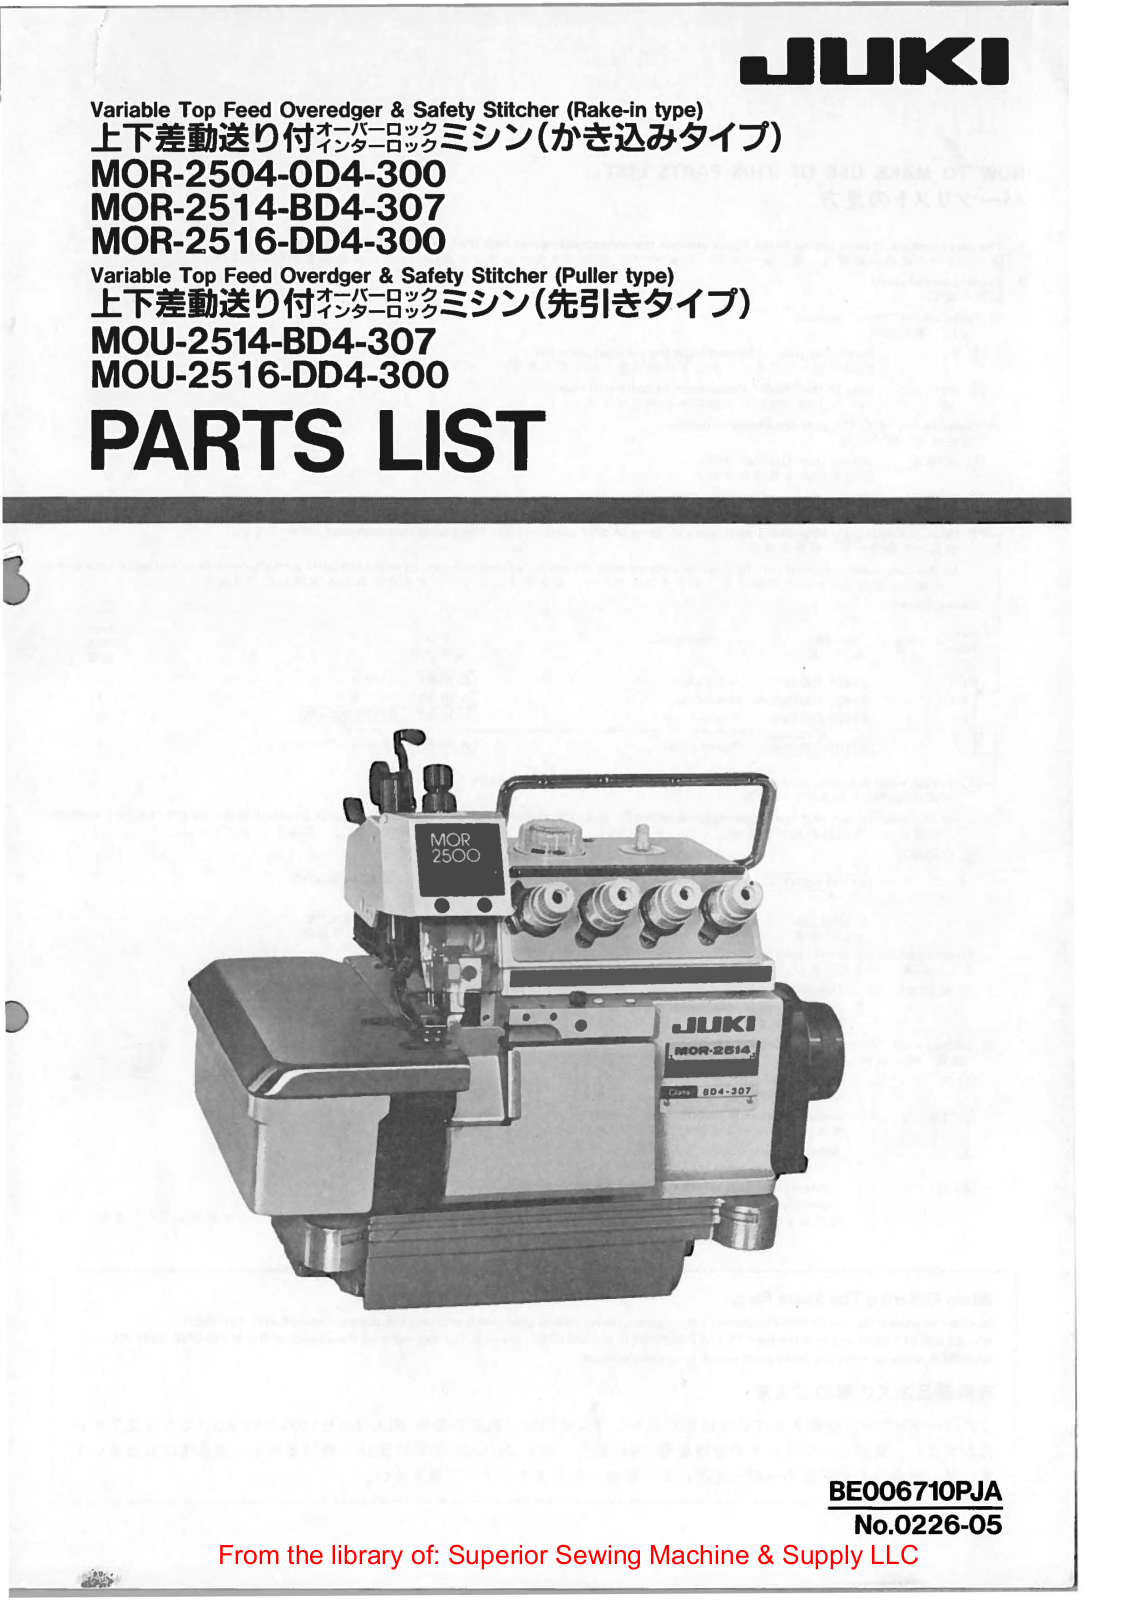 Juki MOR-2504-OD4-300, MOR-2514-BD4-307, MOR-2516-DD4-300, MOU-2514-BD4-307, MOU-2516-DD4-300 Manual